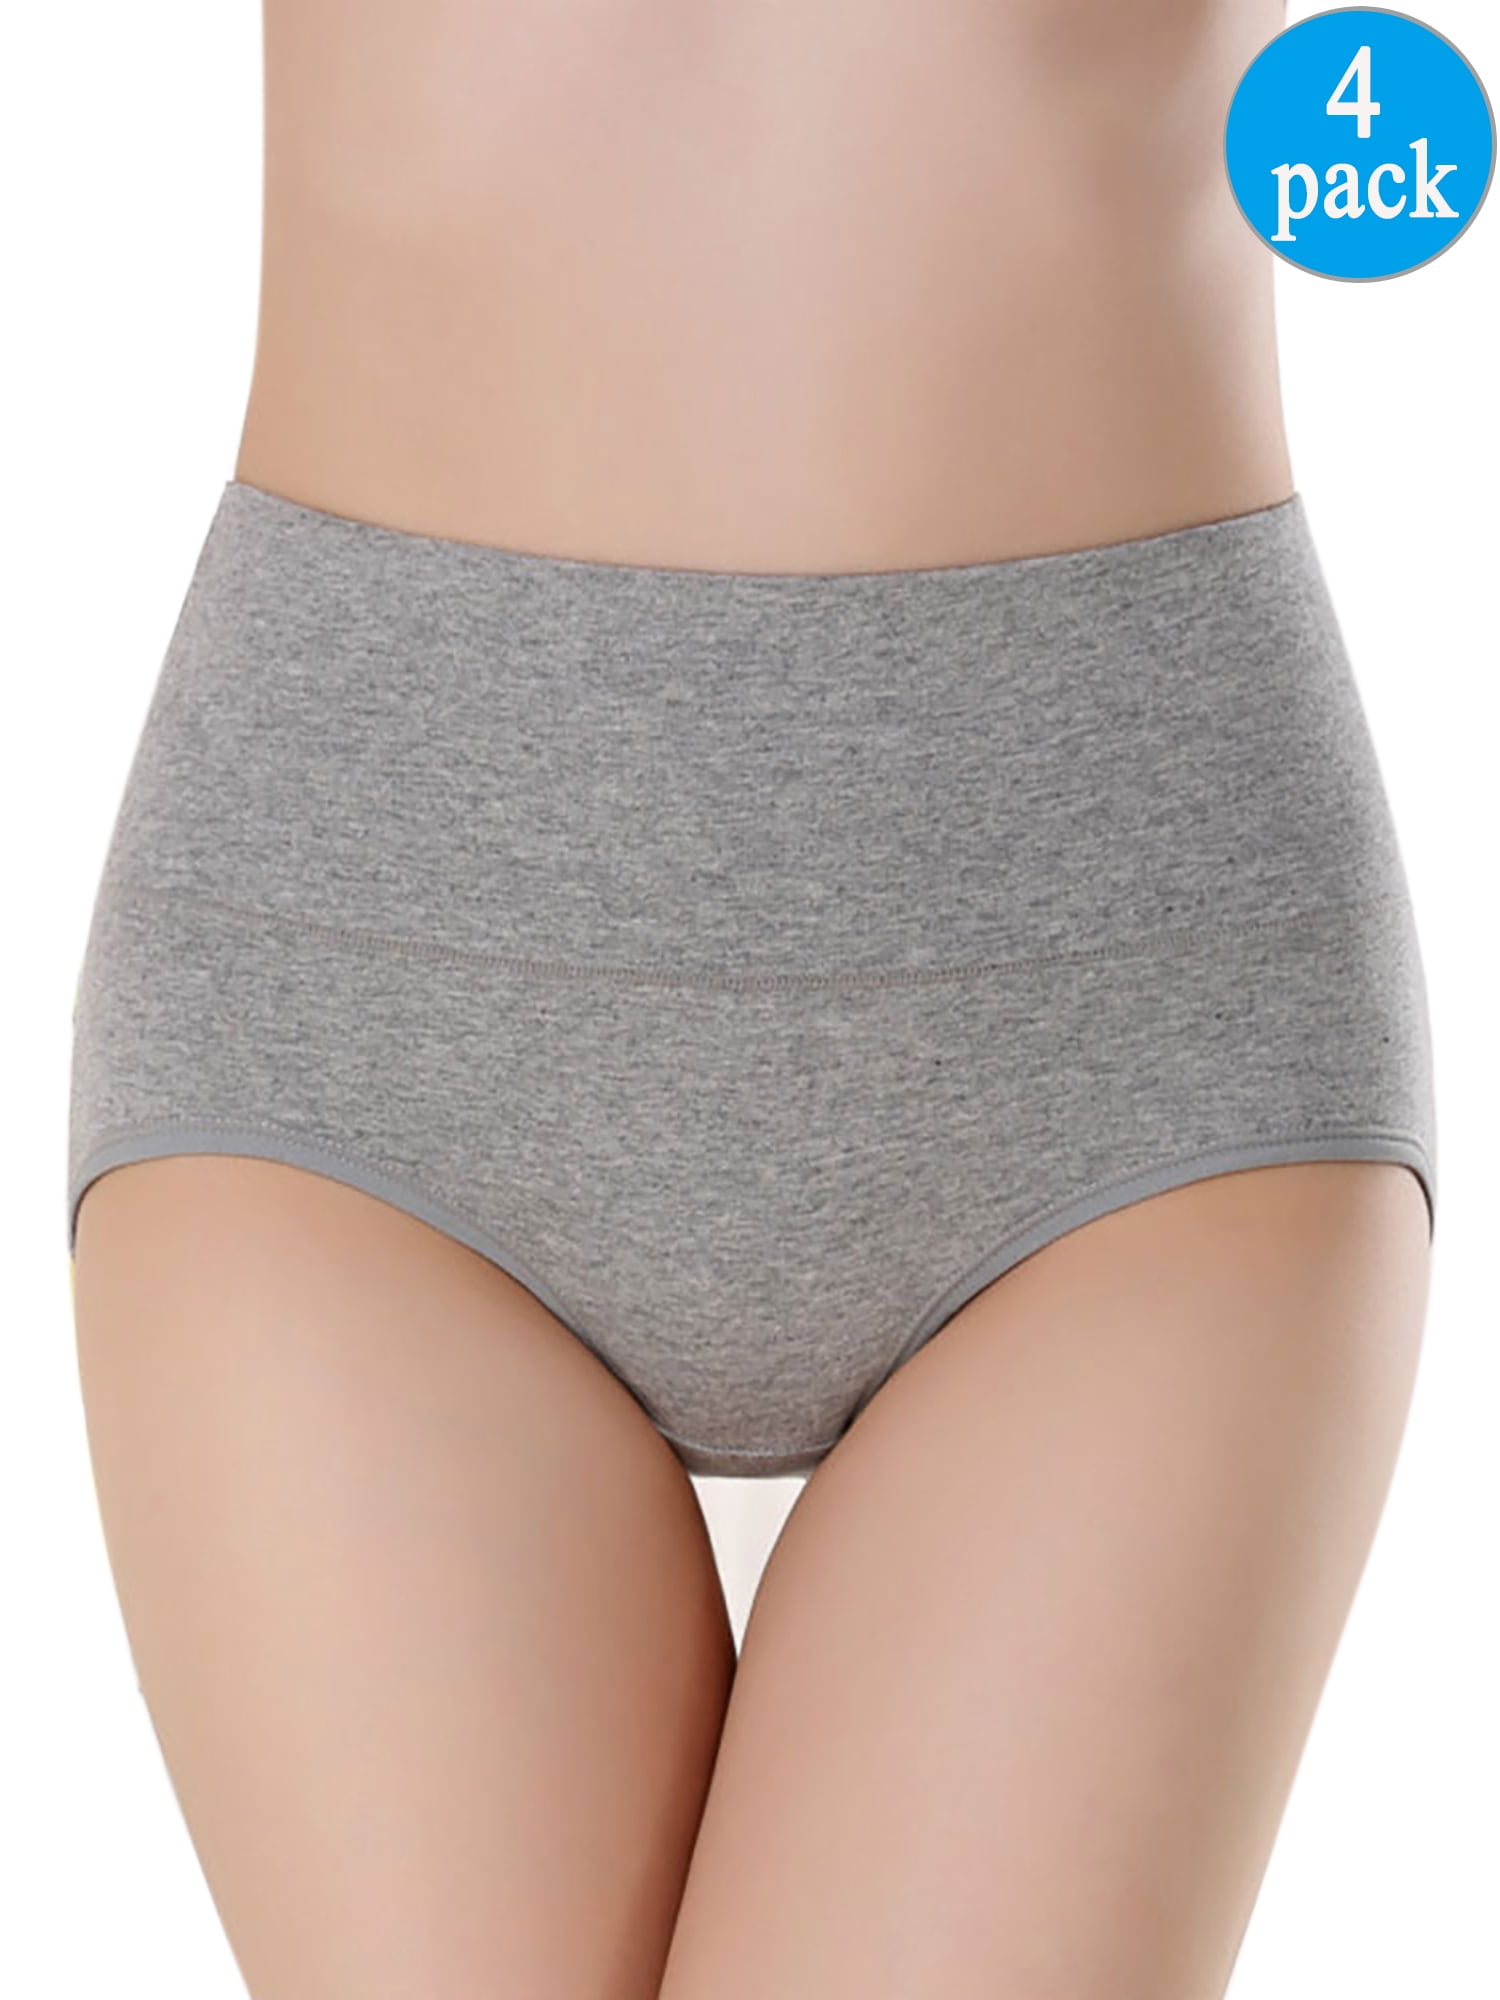 YaShaer Women Underwear Postpartum for Women High Waist Panties C Section Full Coverage Cotton Brief for Women Multipack